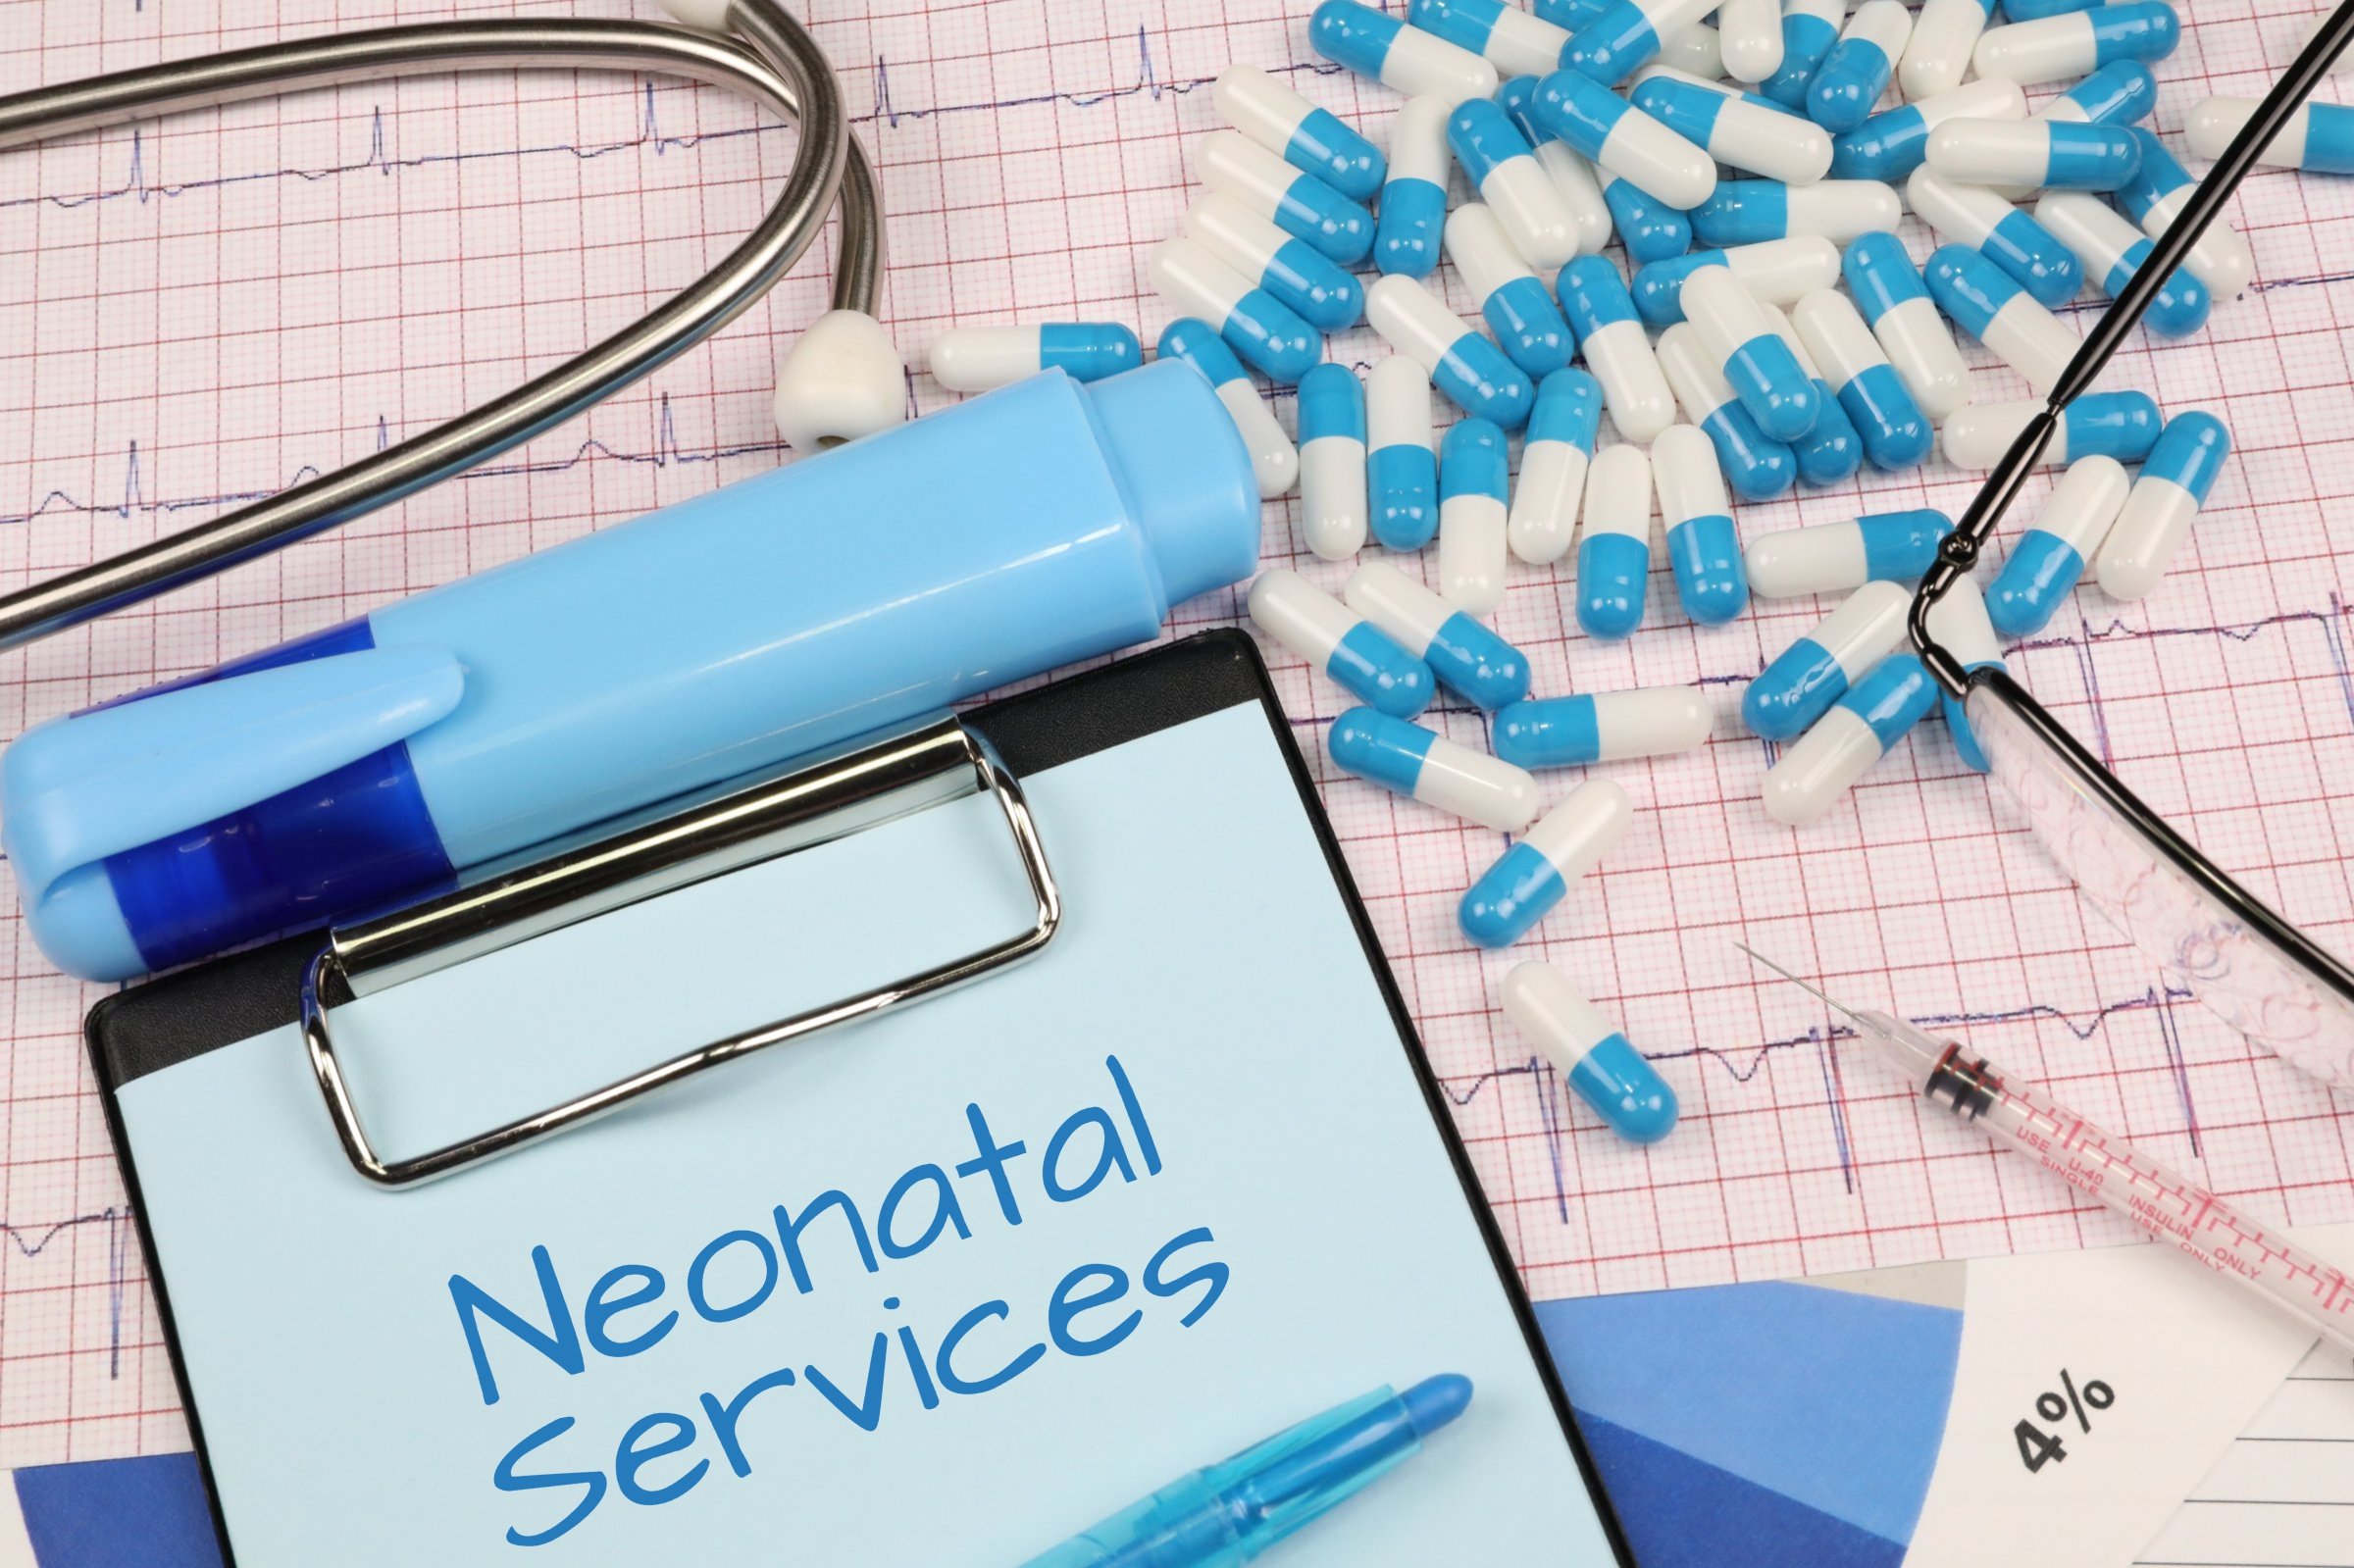 neonatal services